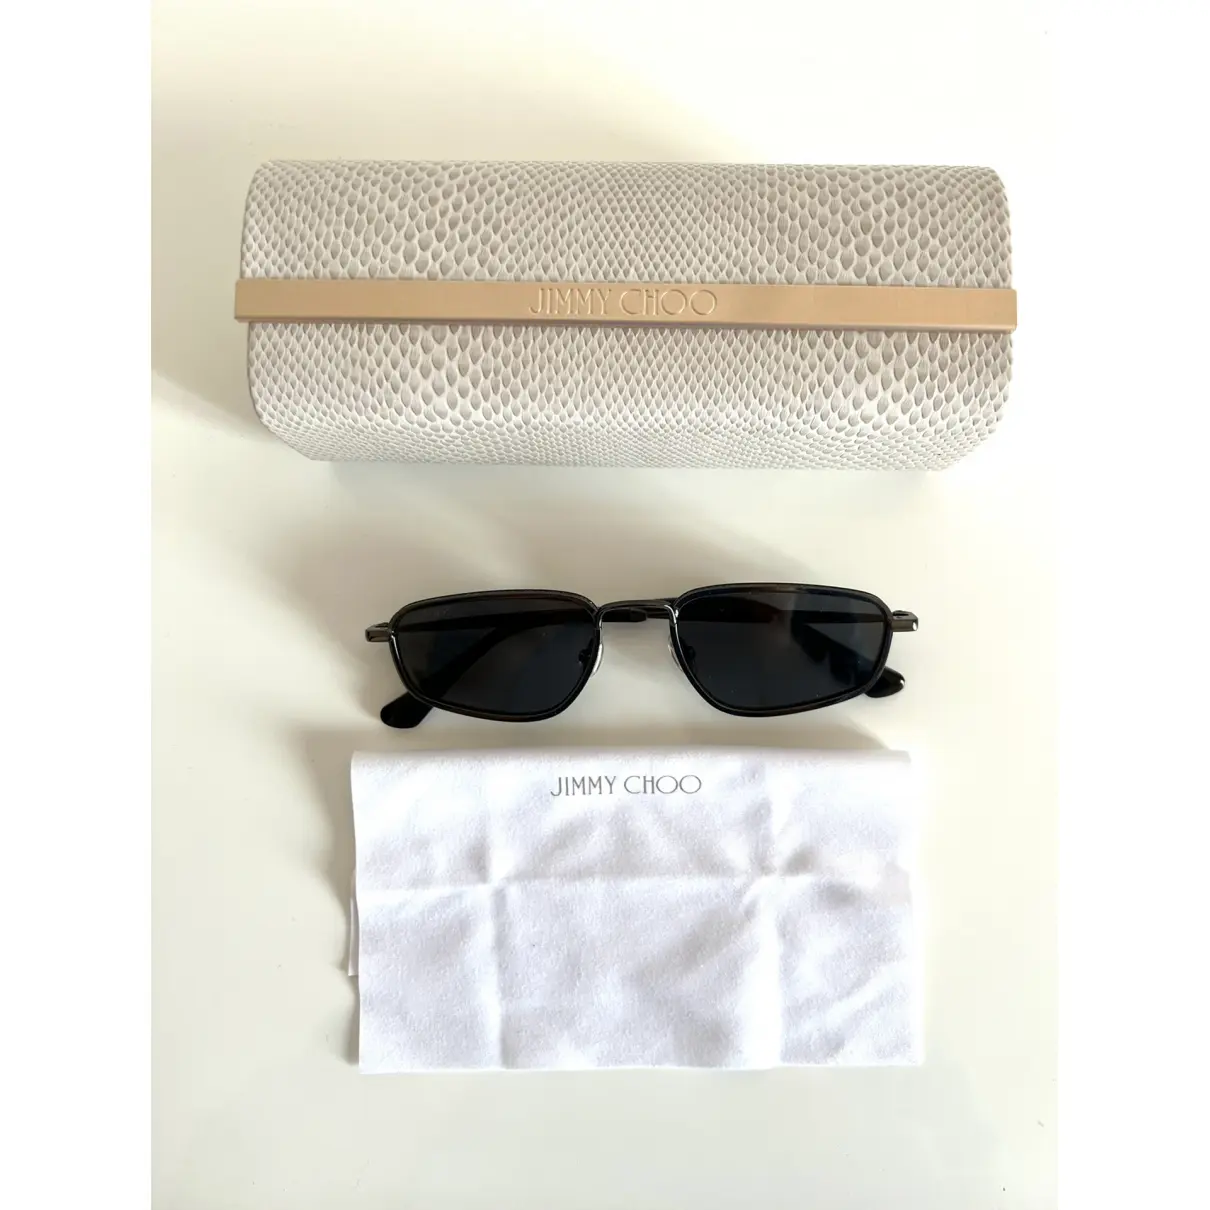 Buy Jimmy Choo Sunglasses online